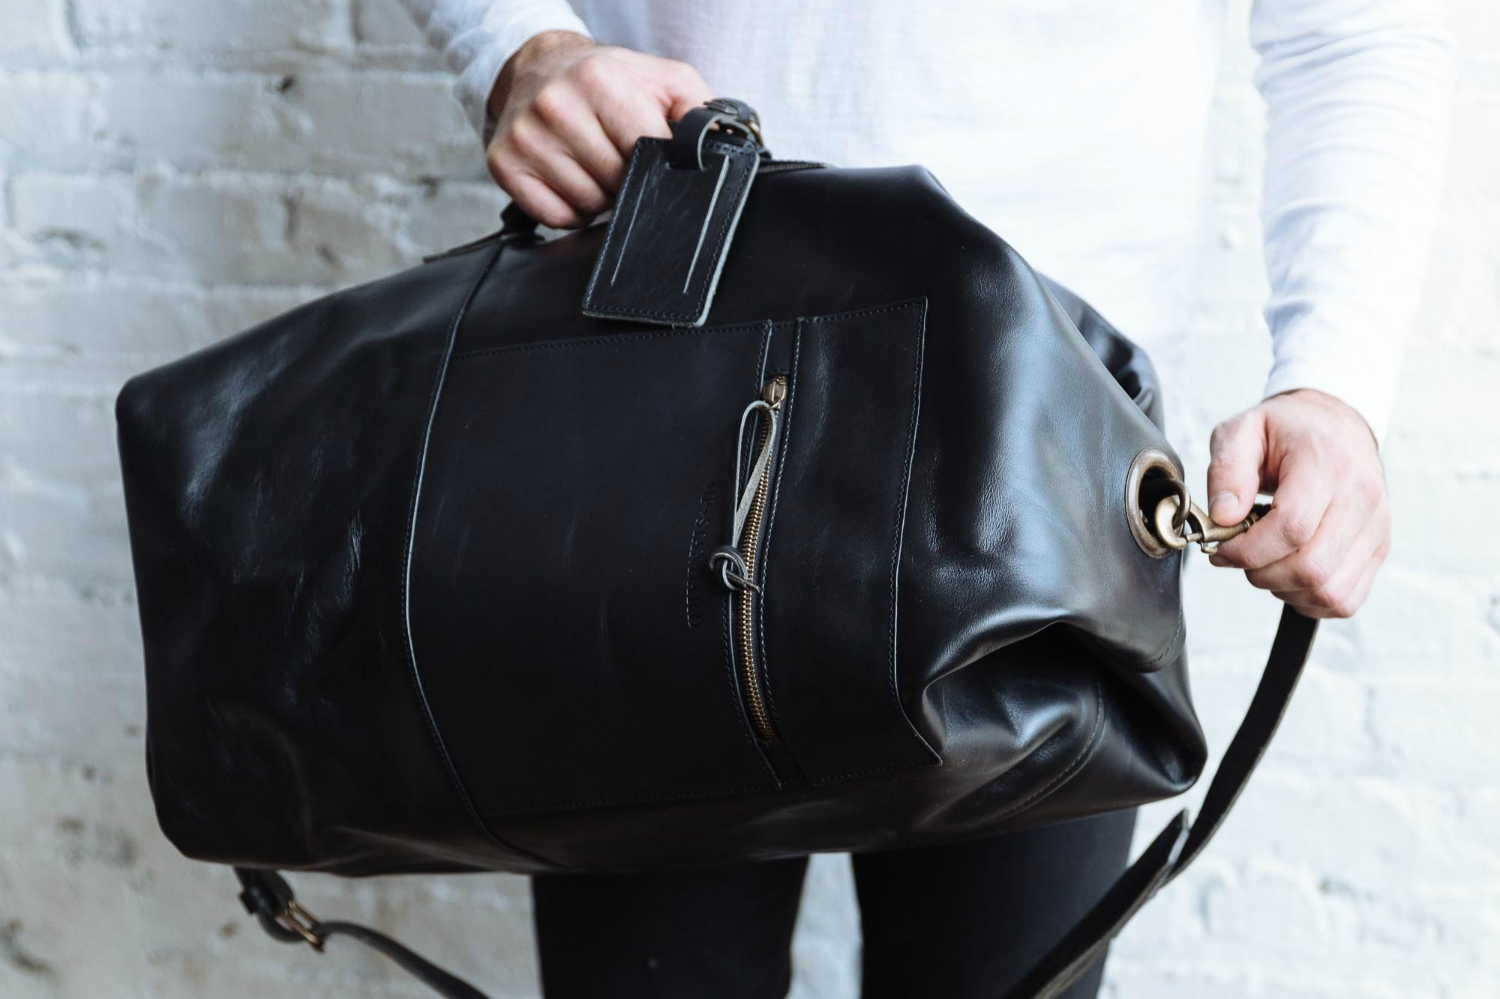 Leather Duffle Bag | Roosevelt Collection | Buffalo Jackson